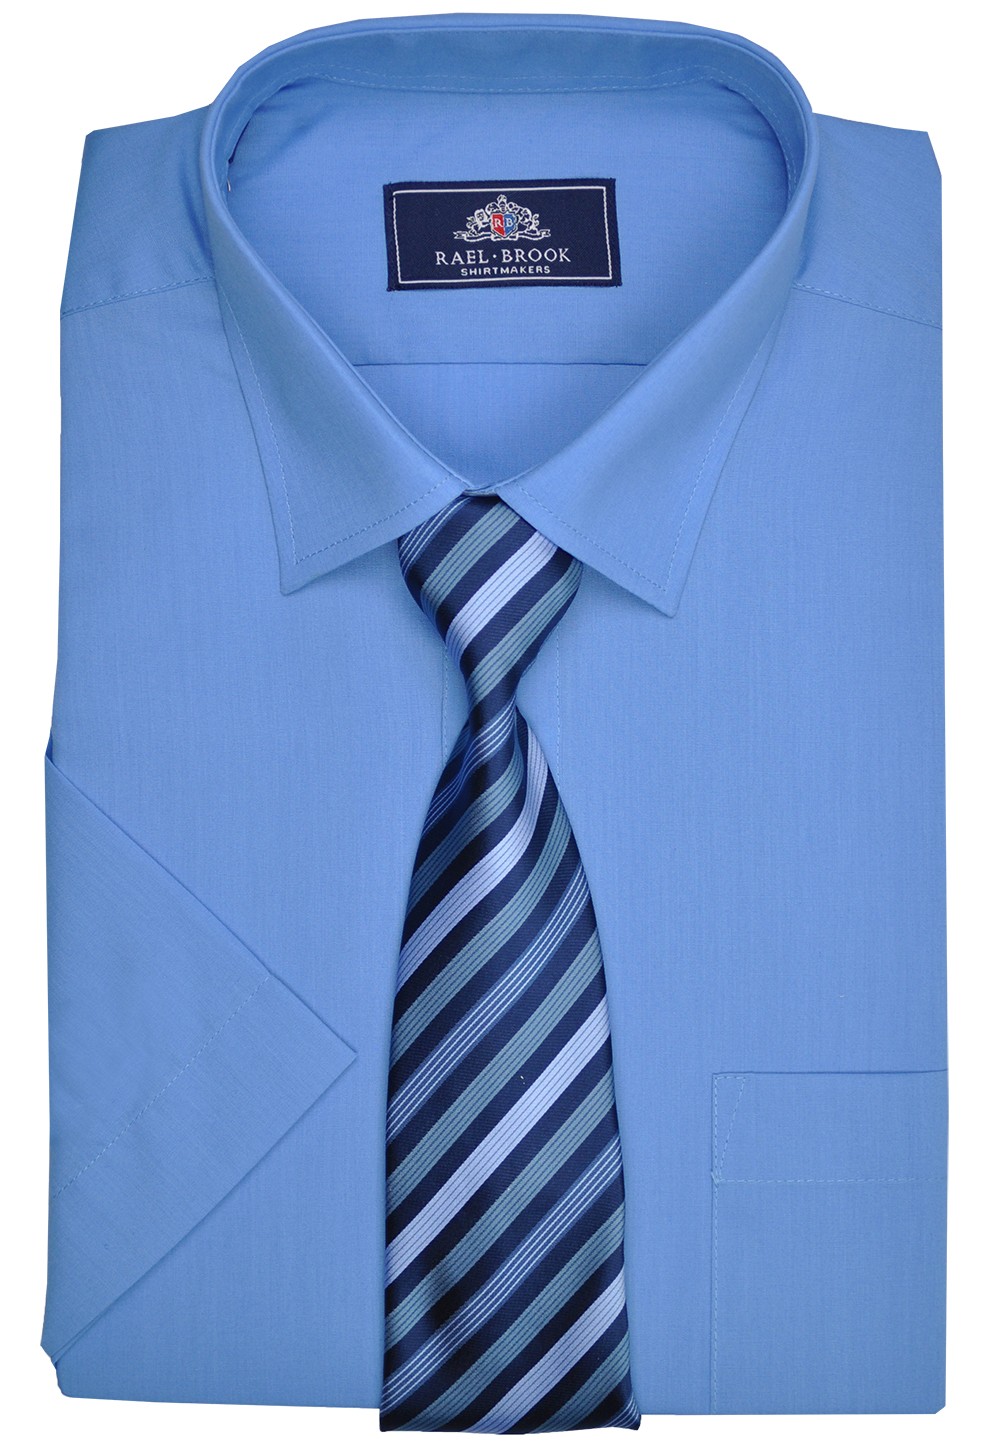 Rael Brook Shirt 78033 Mid Blue size 15